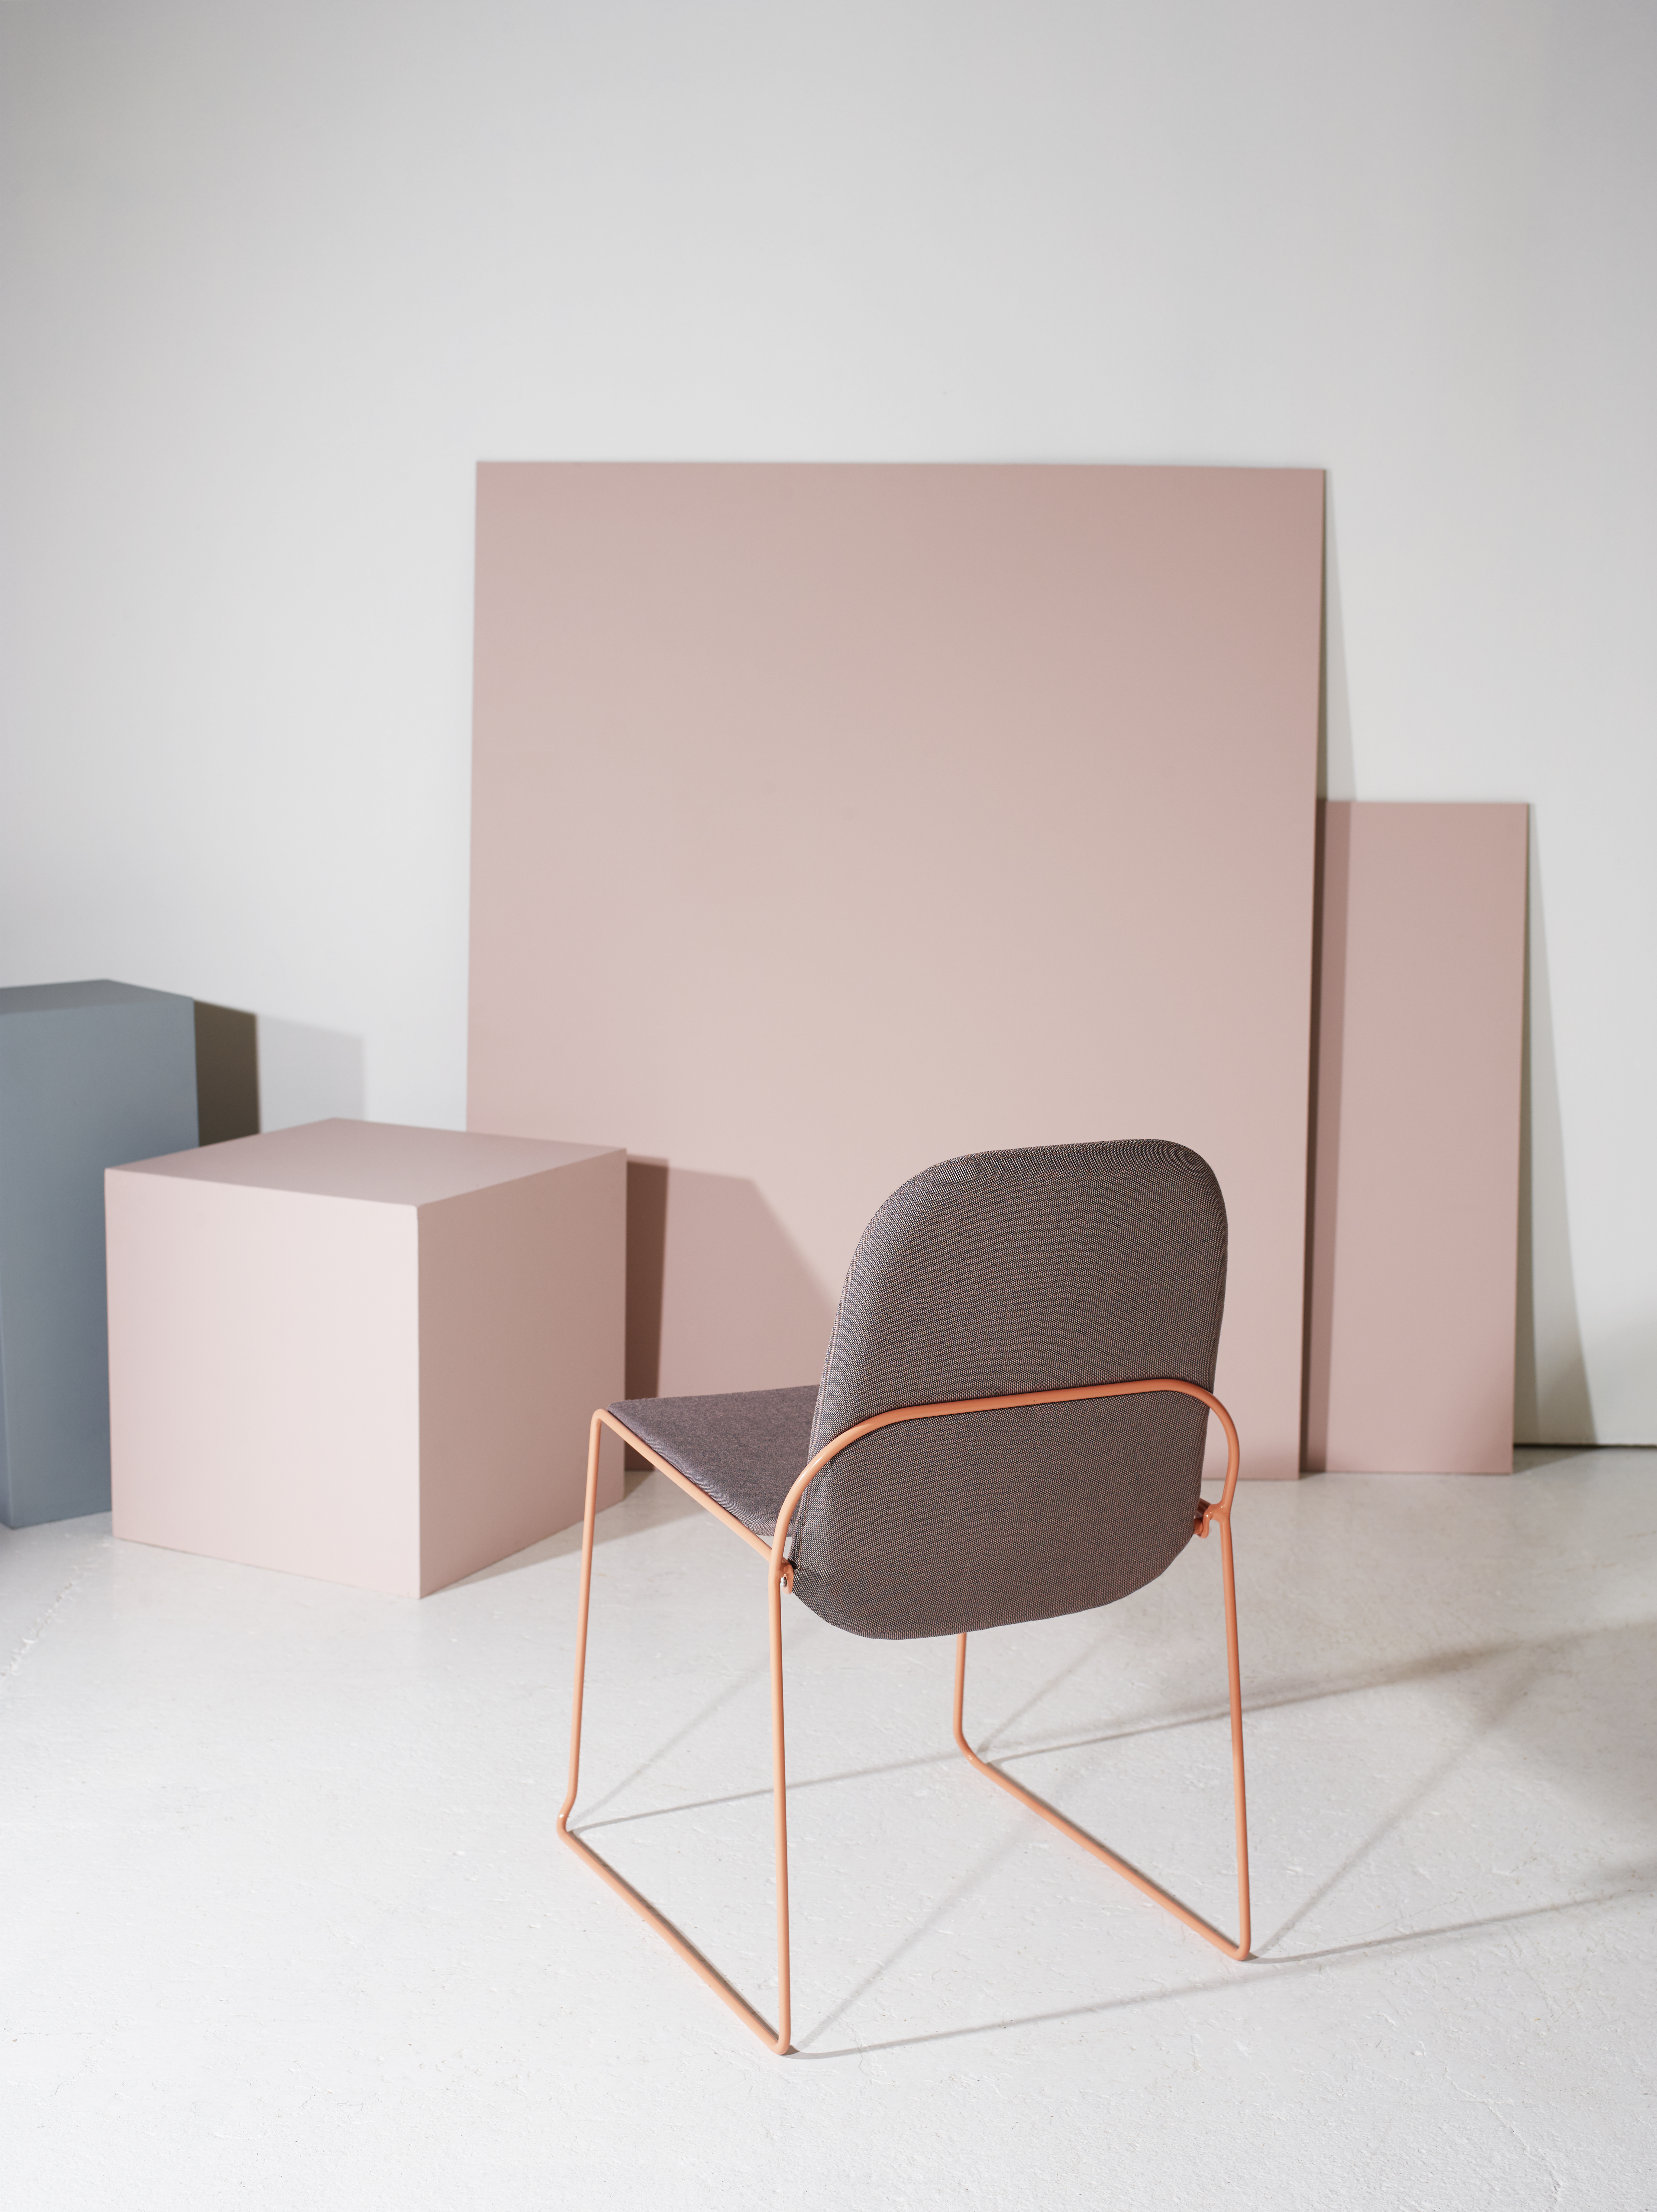 ZETTELER_Structure_Runa Klock_Dual Chair_Photo Siren Laudal Nordic craft and design talent